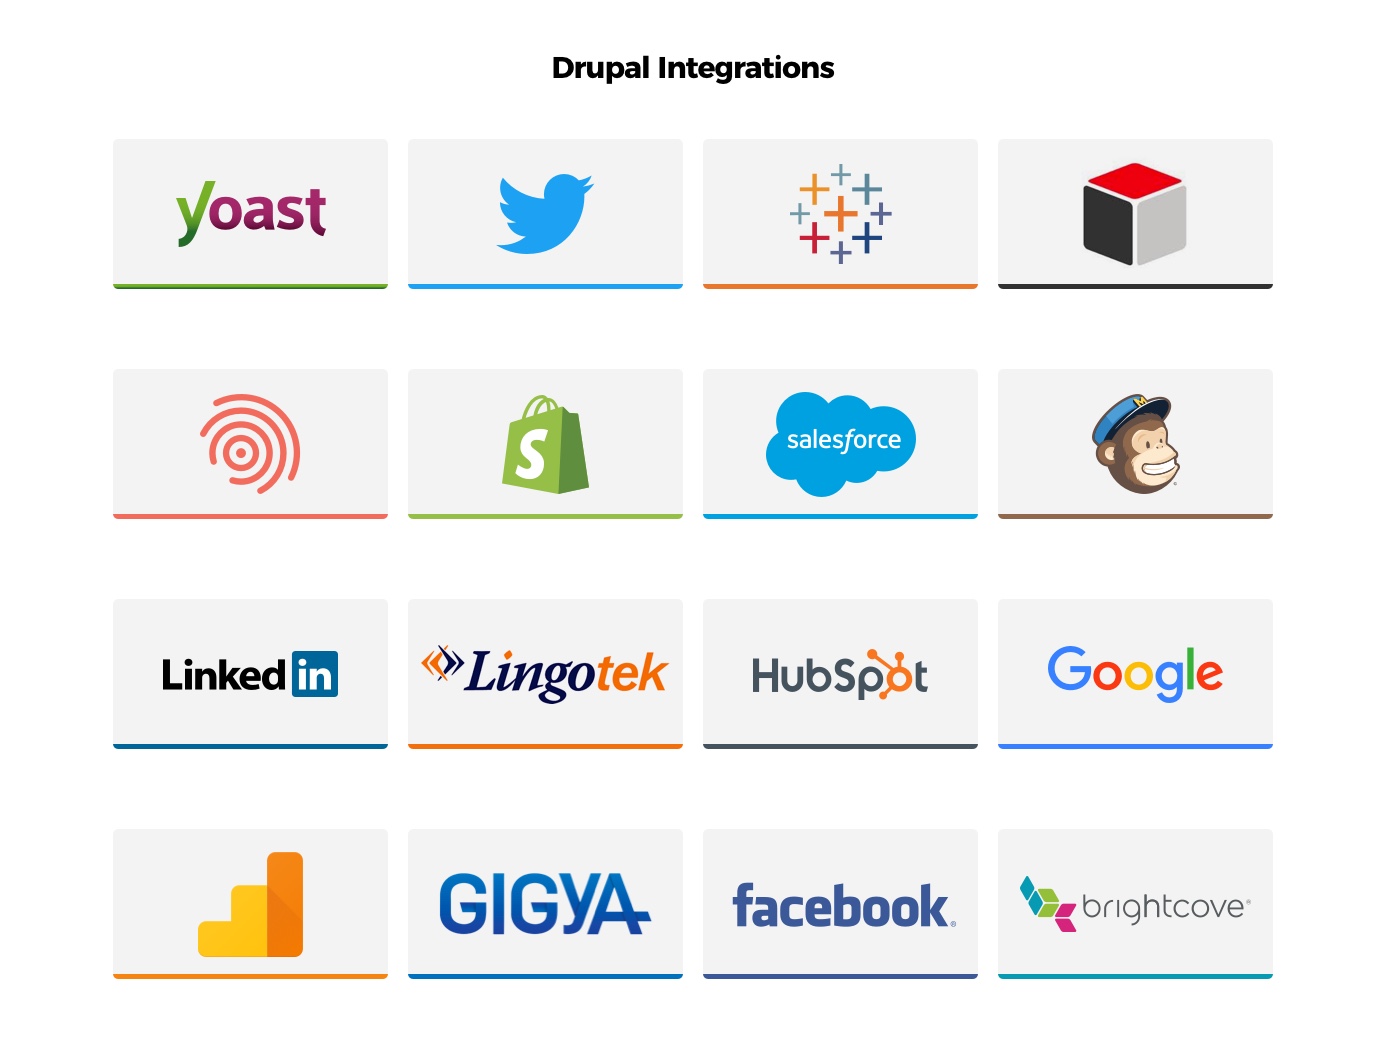 Drupal education content management system integrations